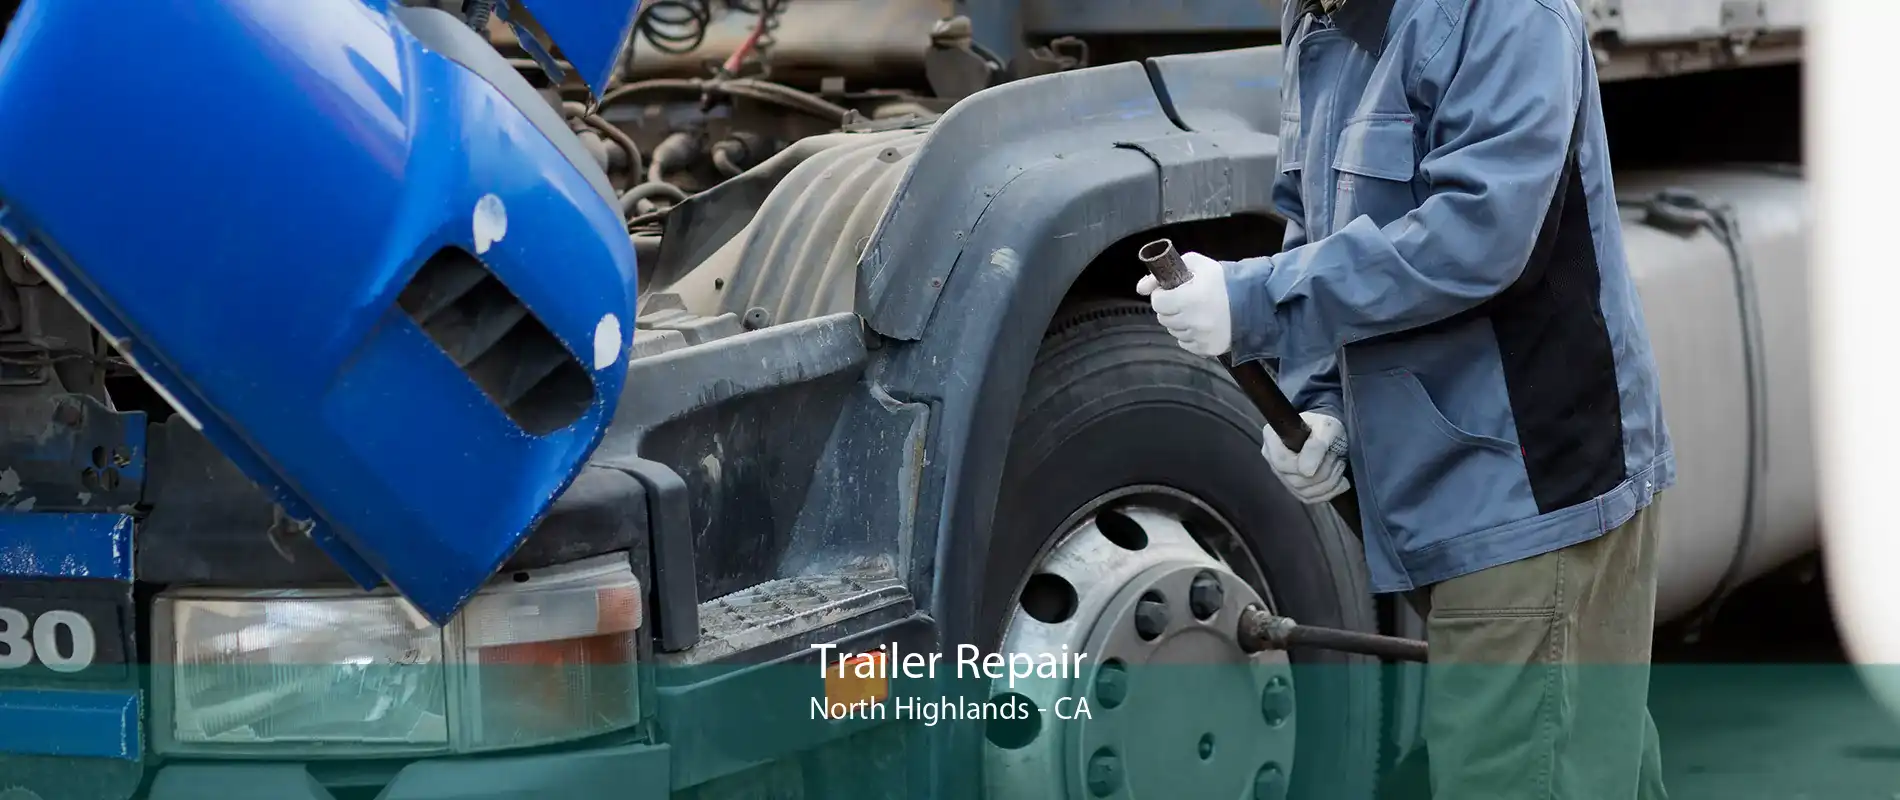 Trailer Repair North Highlands - CA